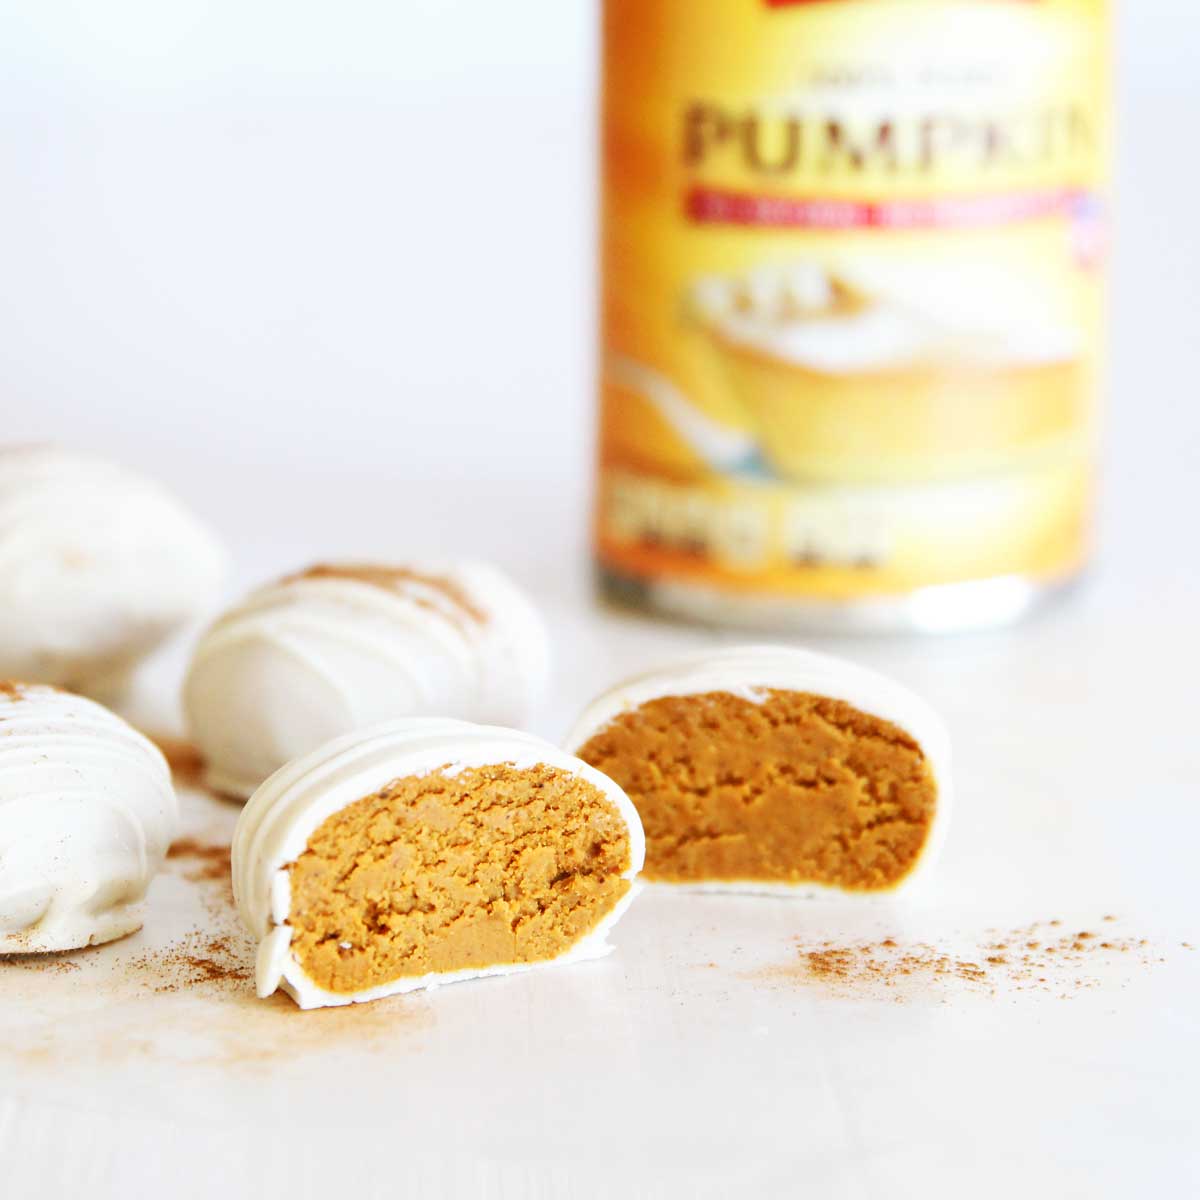 PB Fit Pumpkin Spice White Chocolate Easter Eggs (4-Ingredient Vegan Recipe!) - yeast bread